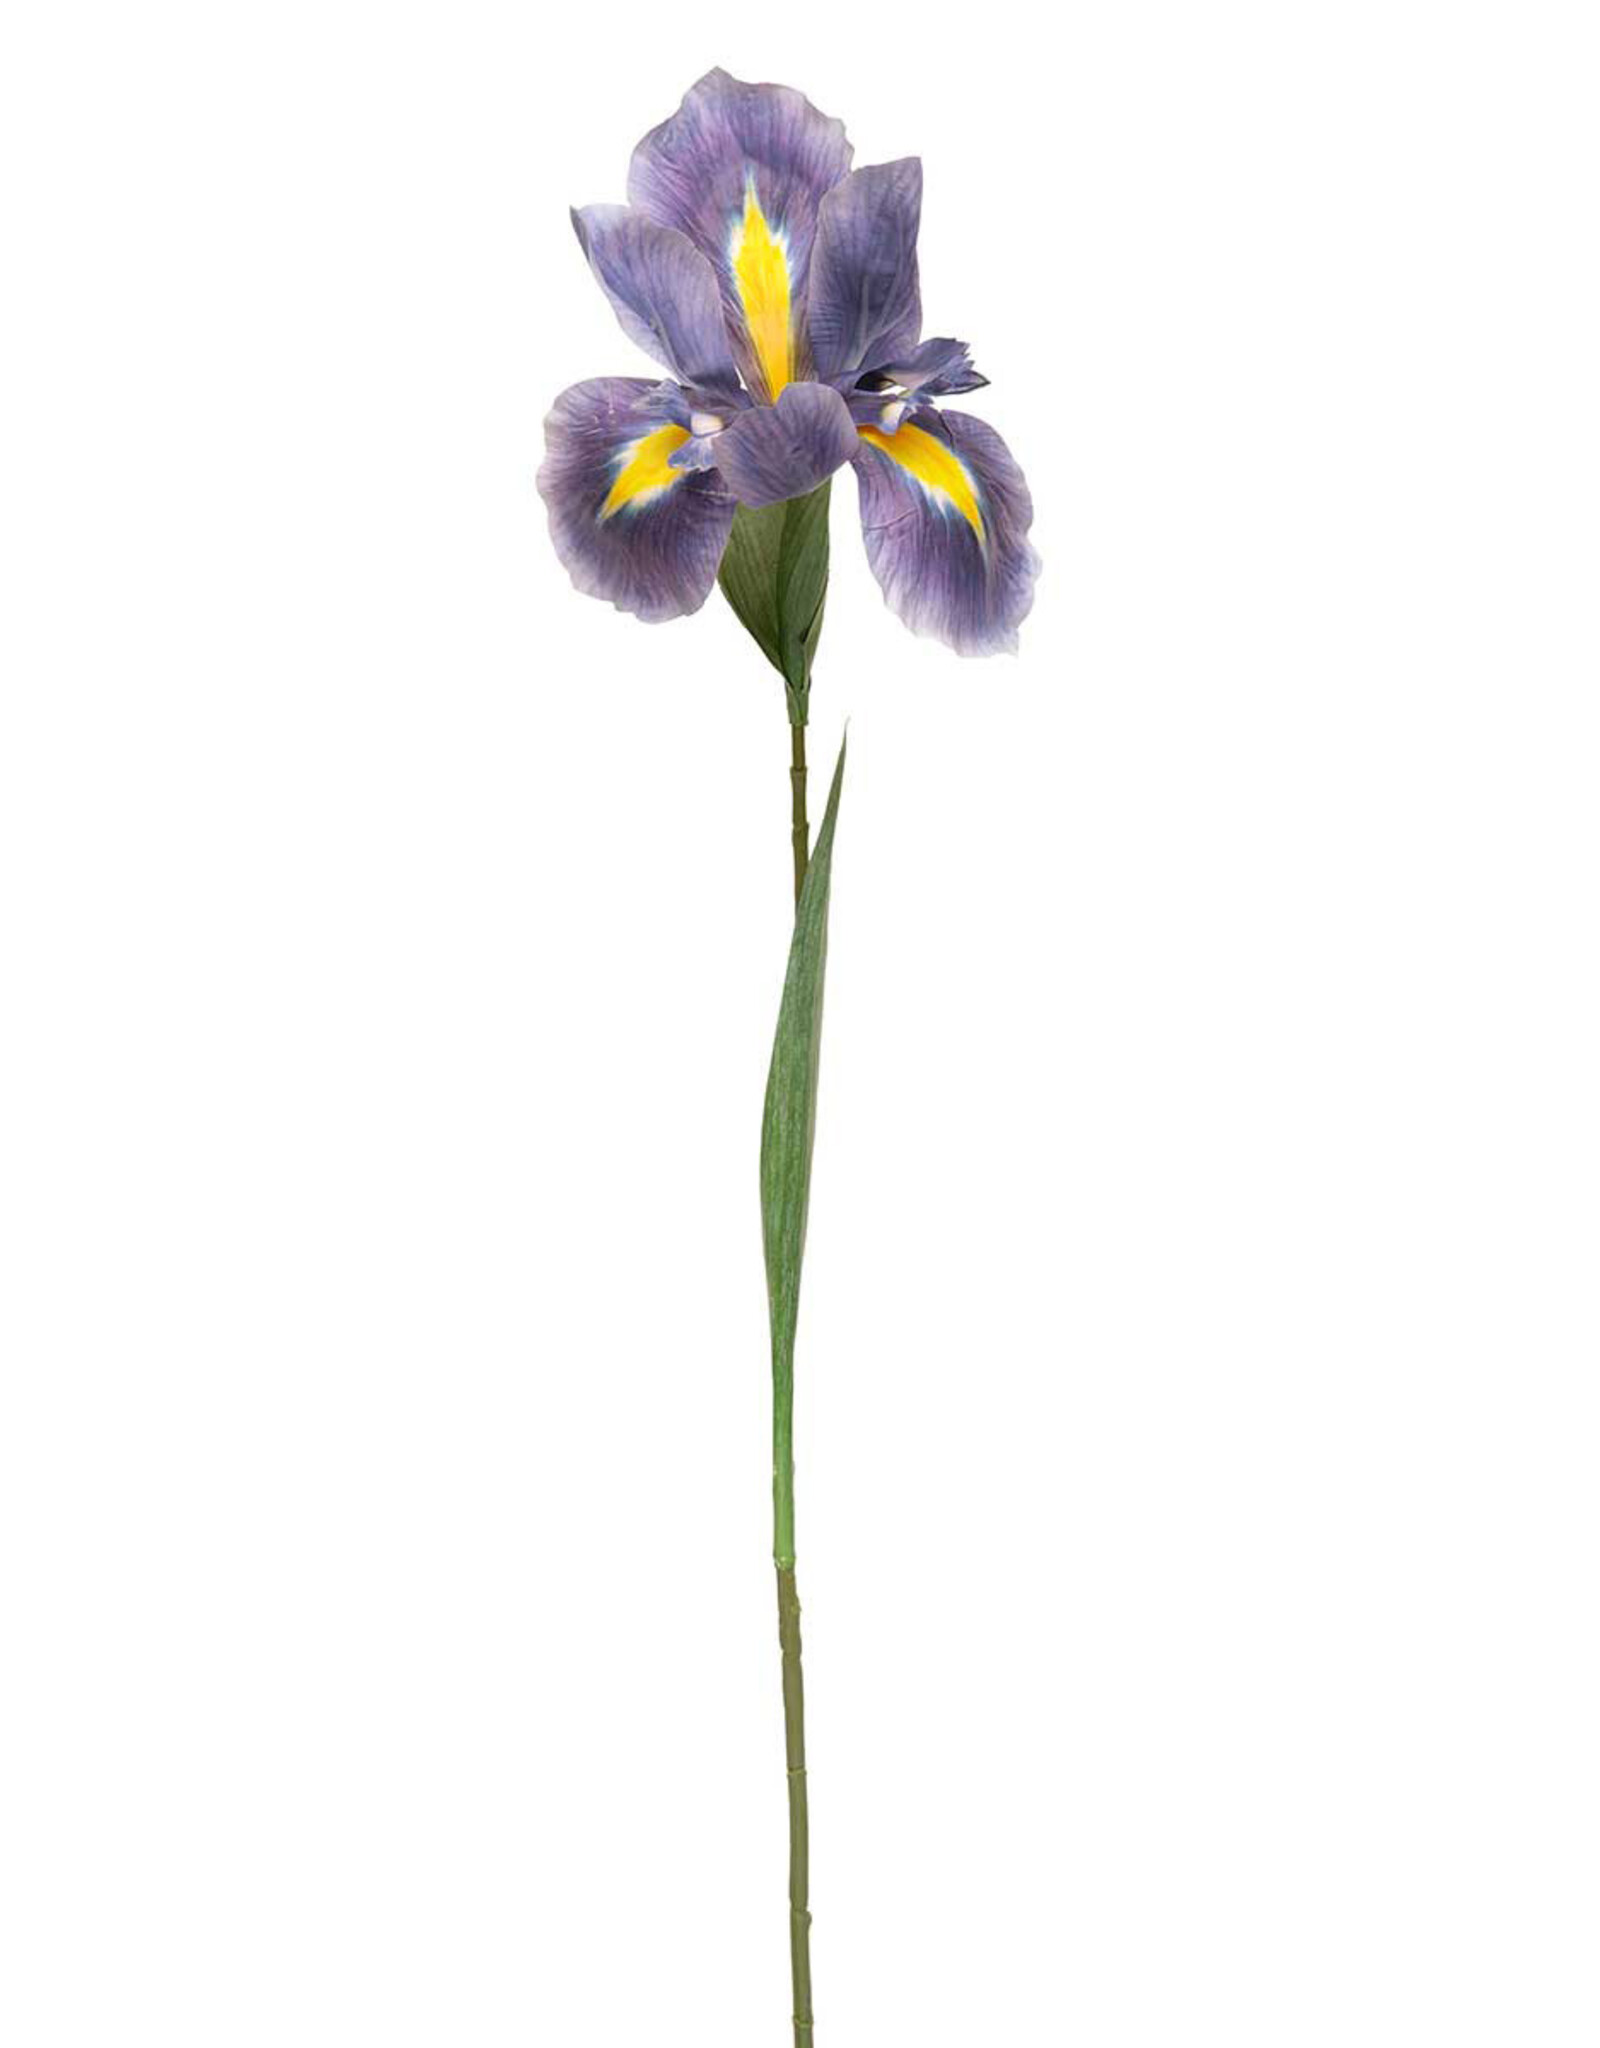 Meravic 31" Dutch Iris Stem - Purple